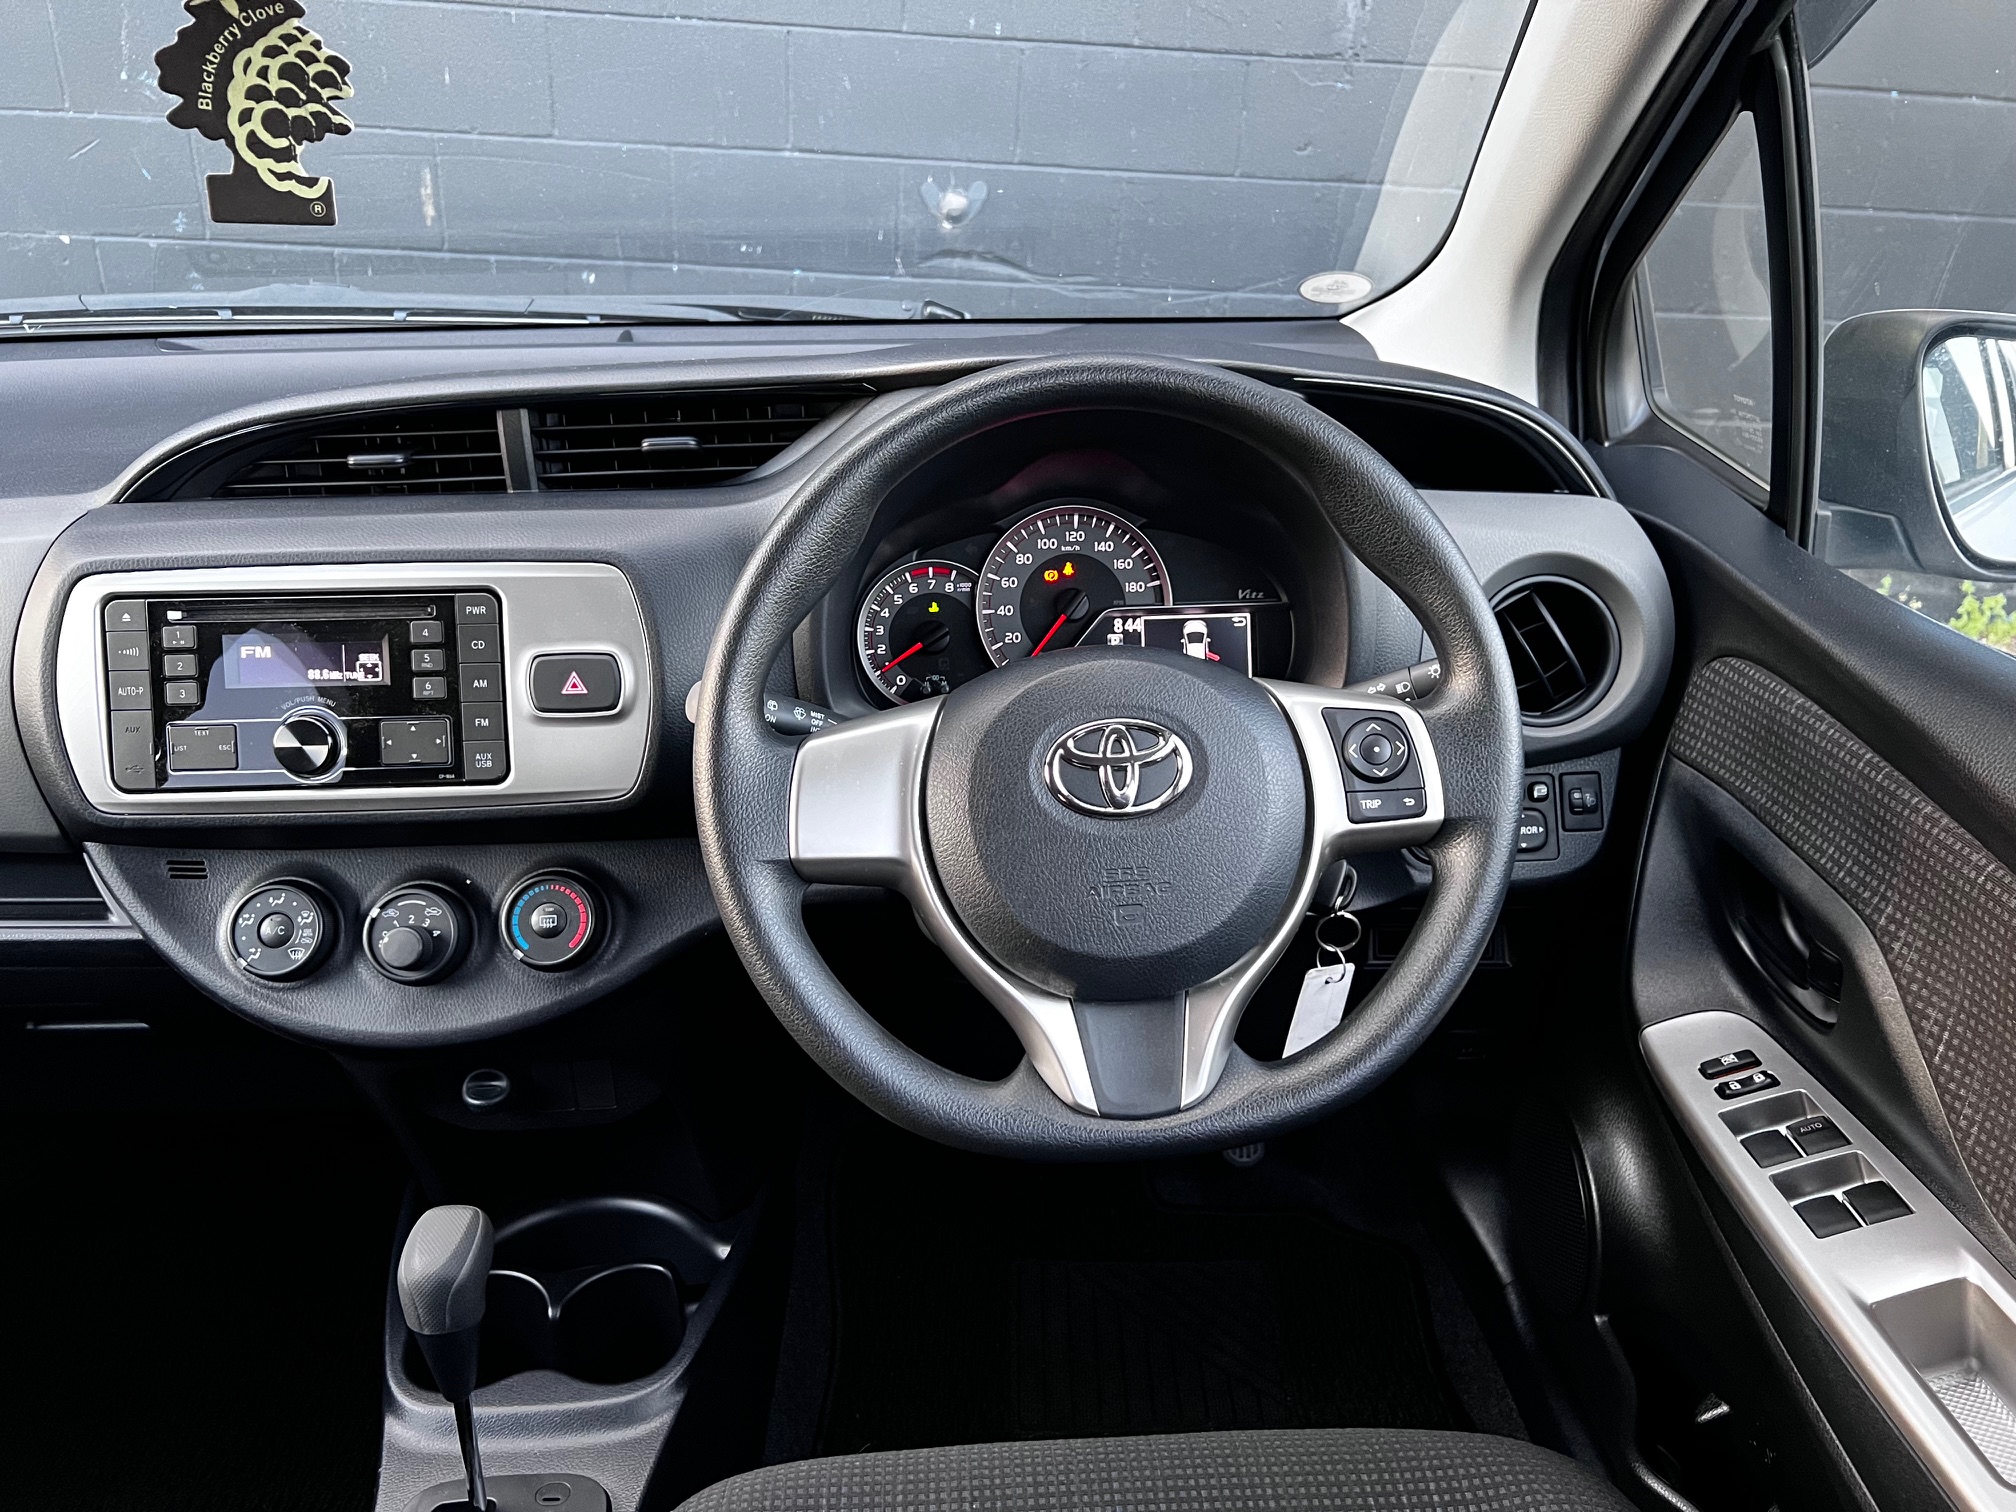 Toyota Vitz 2014 Image 13